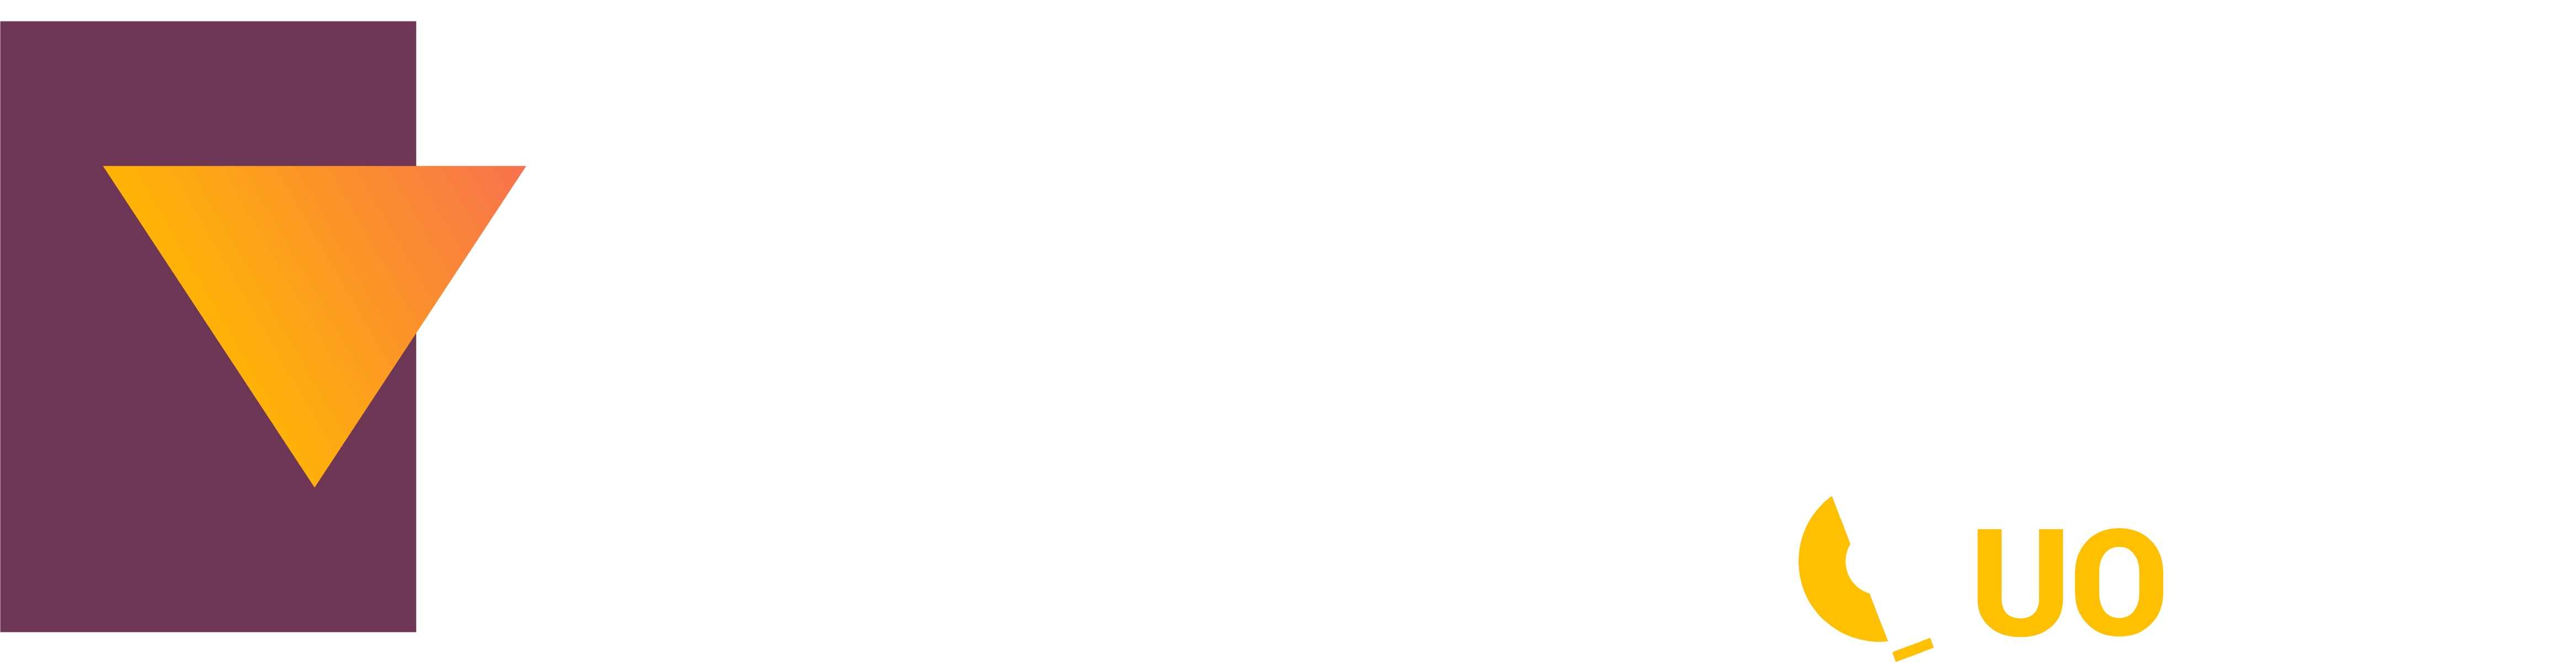 gamiquo logo